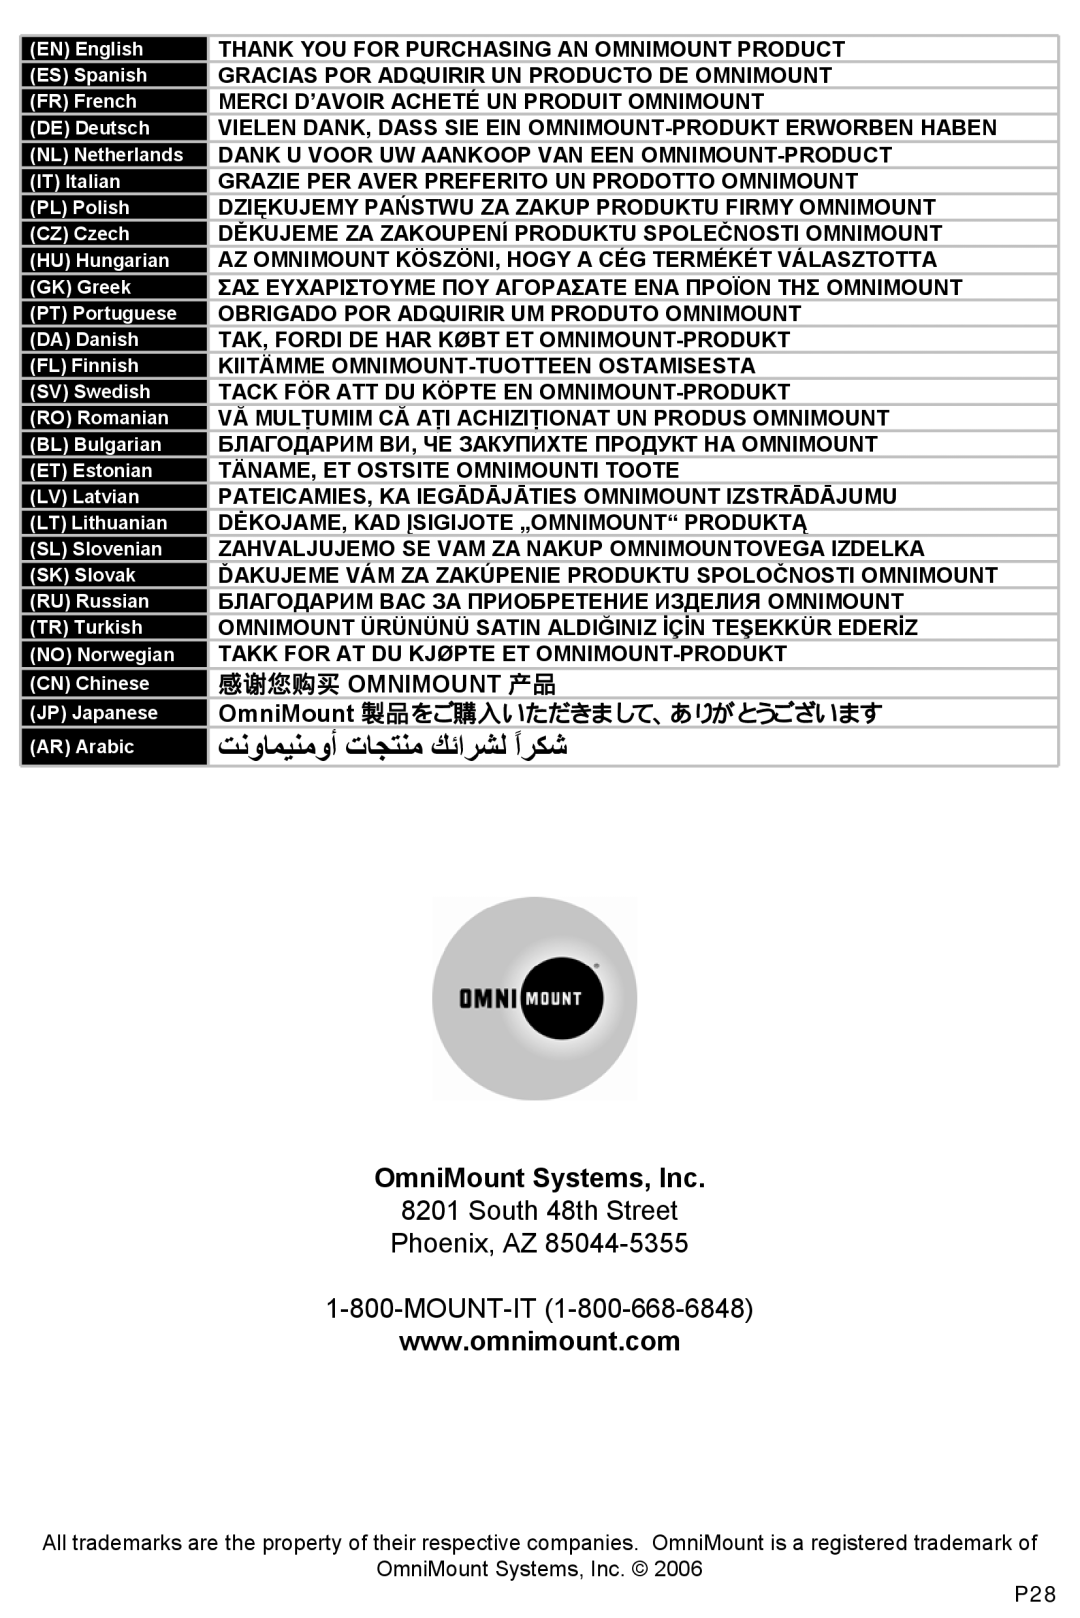 Omnimount UCL-4, 10238 manual OmniMount Systems, Inc, South 48th Street Phoenix, AZ 1-800-MOUNT-IT, 感谢您购买 Omnimount 产品 